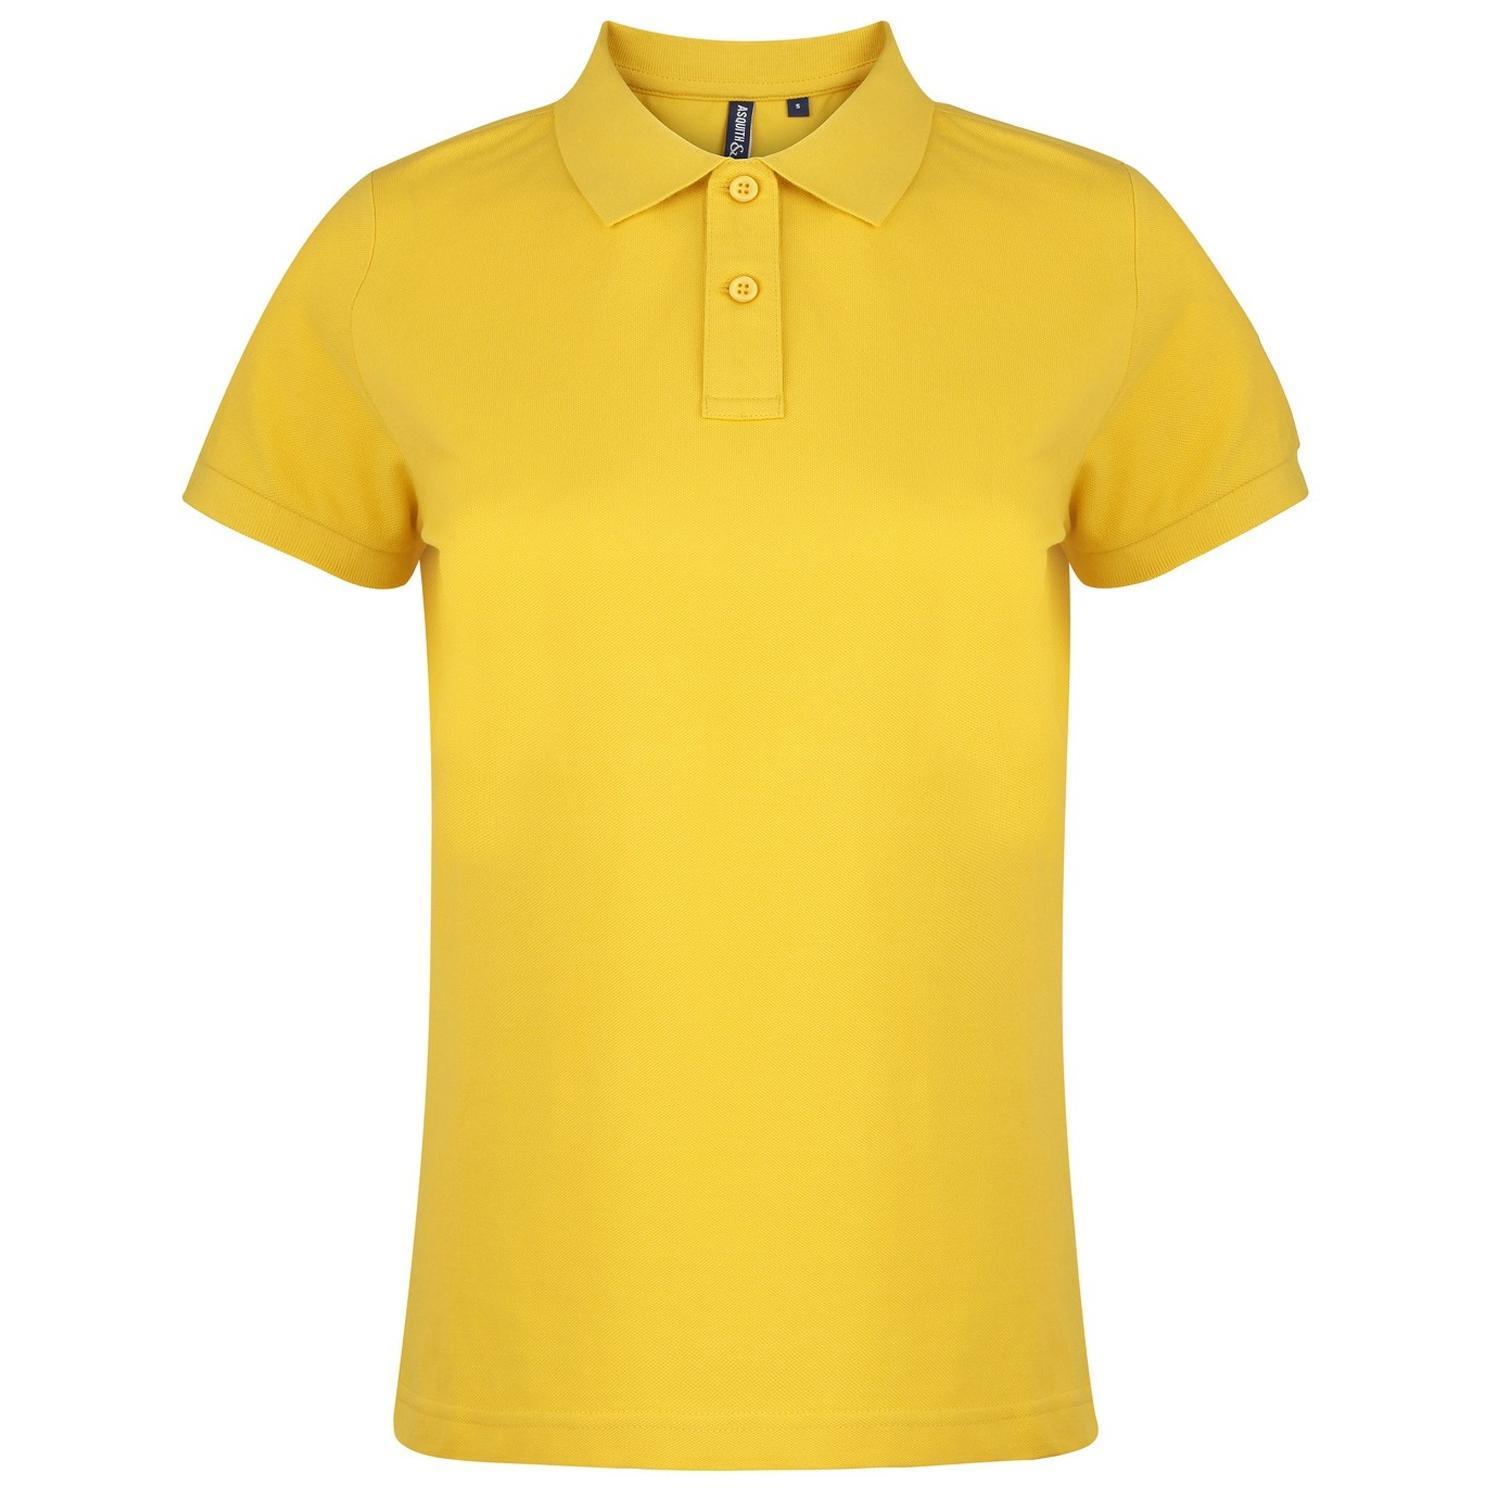 Asquith & Fox Womens/Ladies Plain Short Sleeve Polo Shirt (Sunflower) (M)